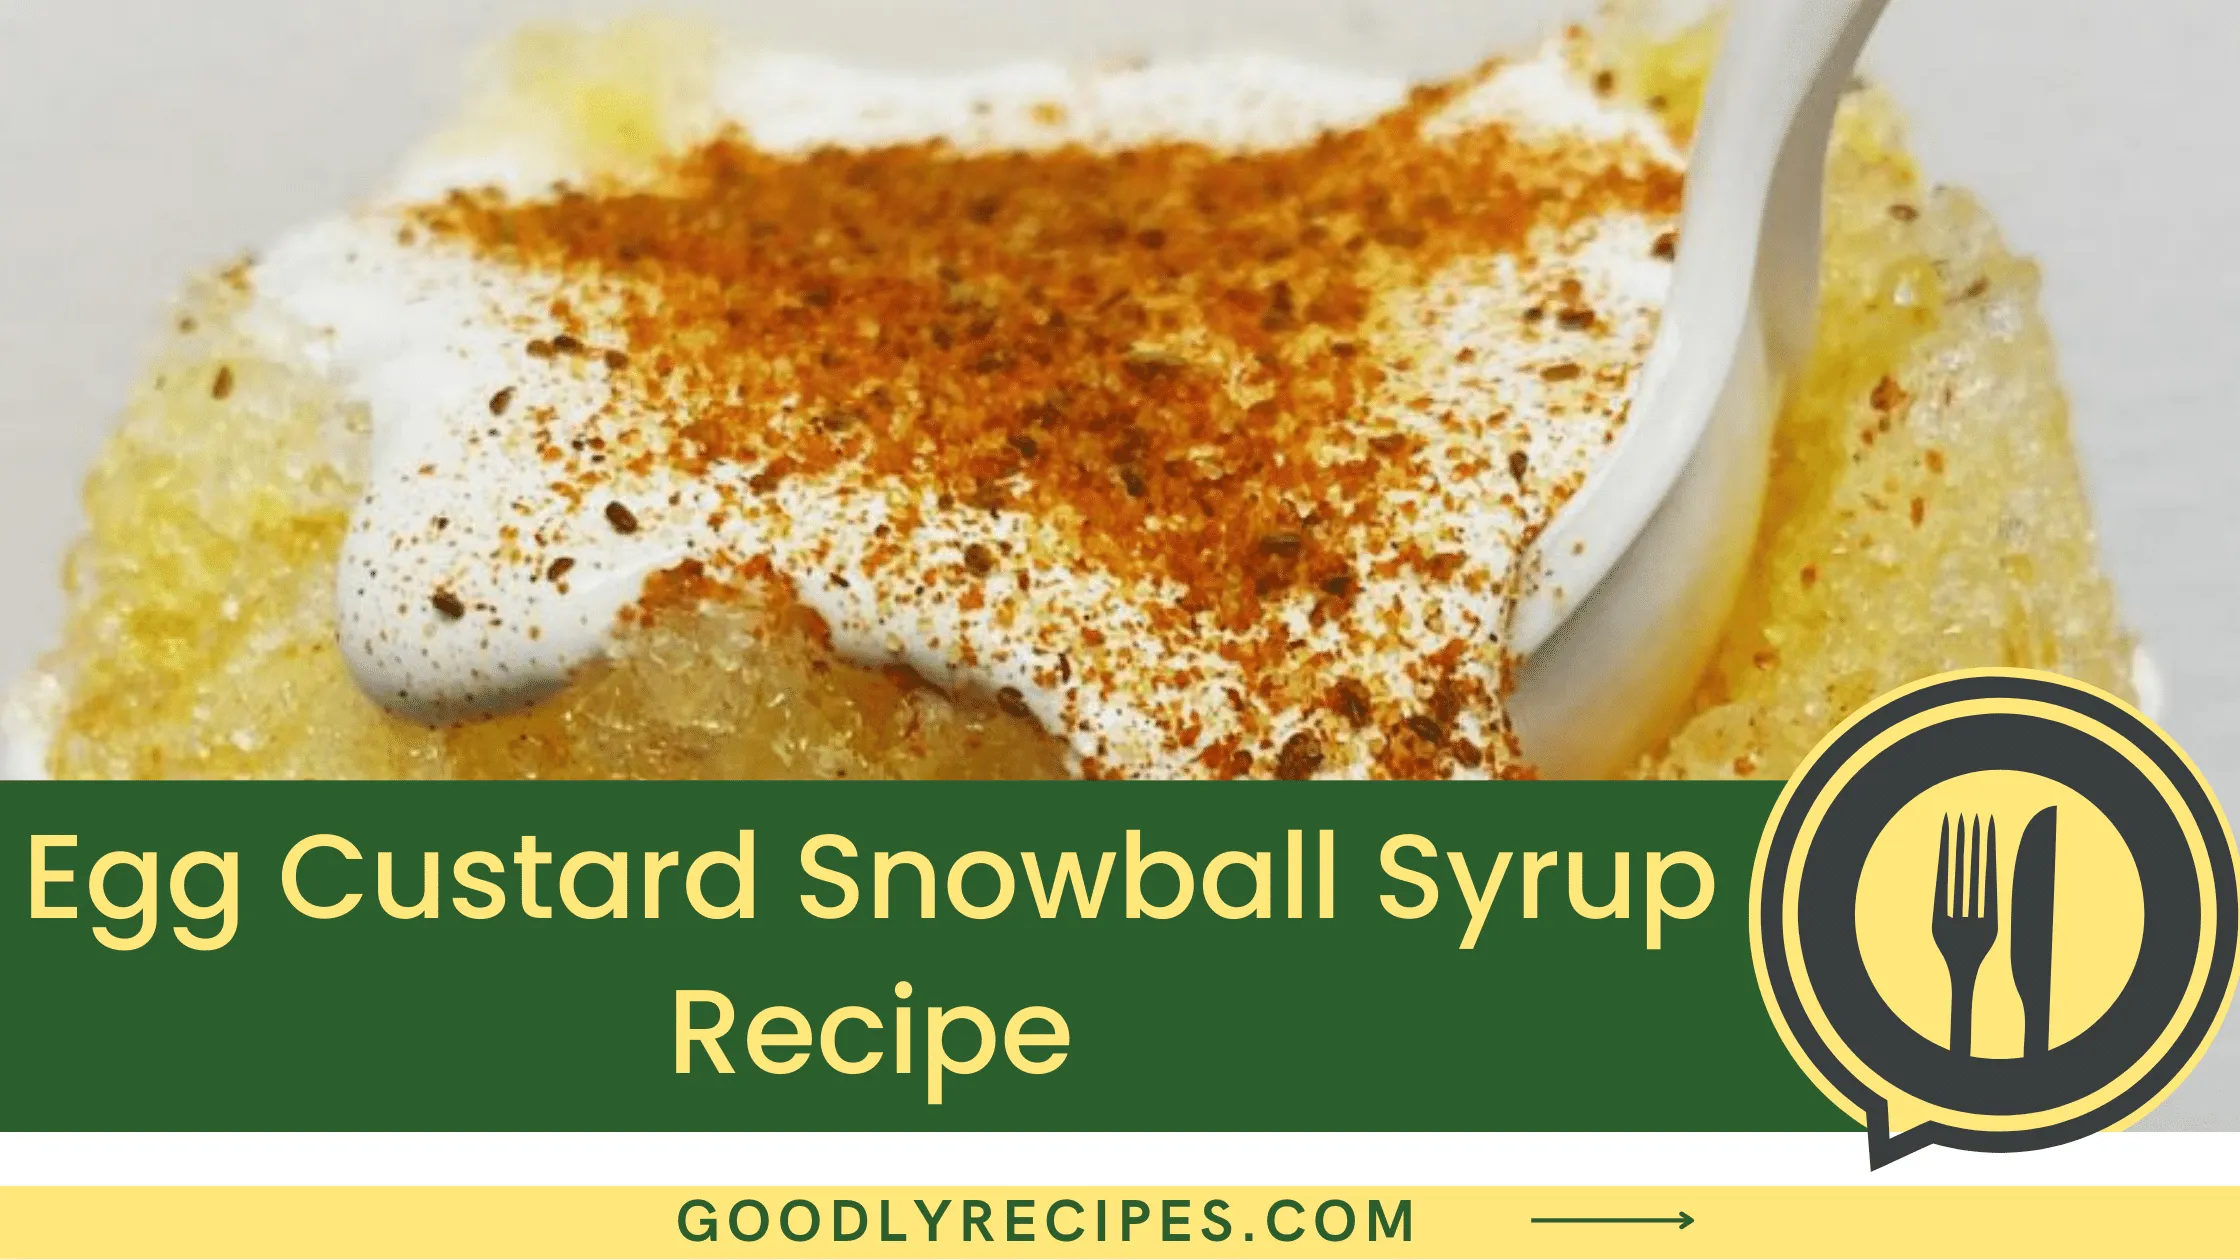 Egg Custard Snowball Syrup Recipe